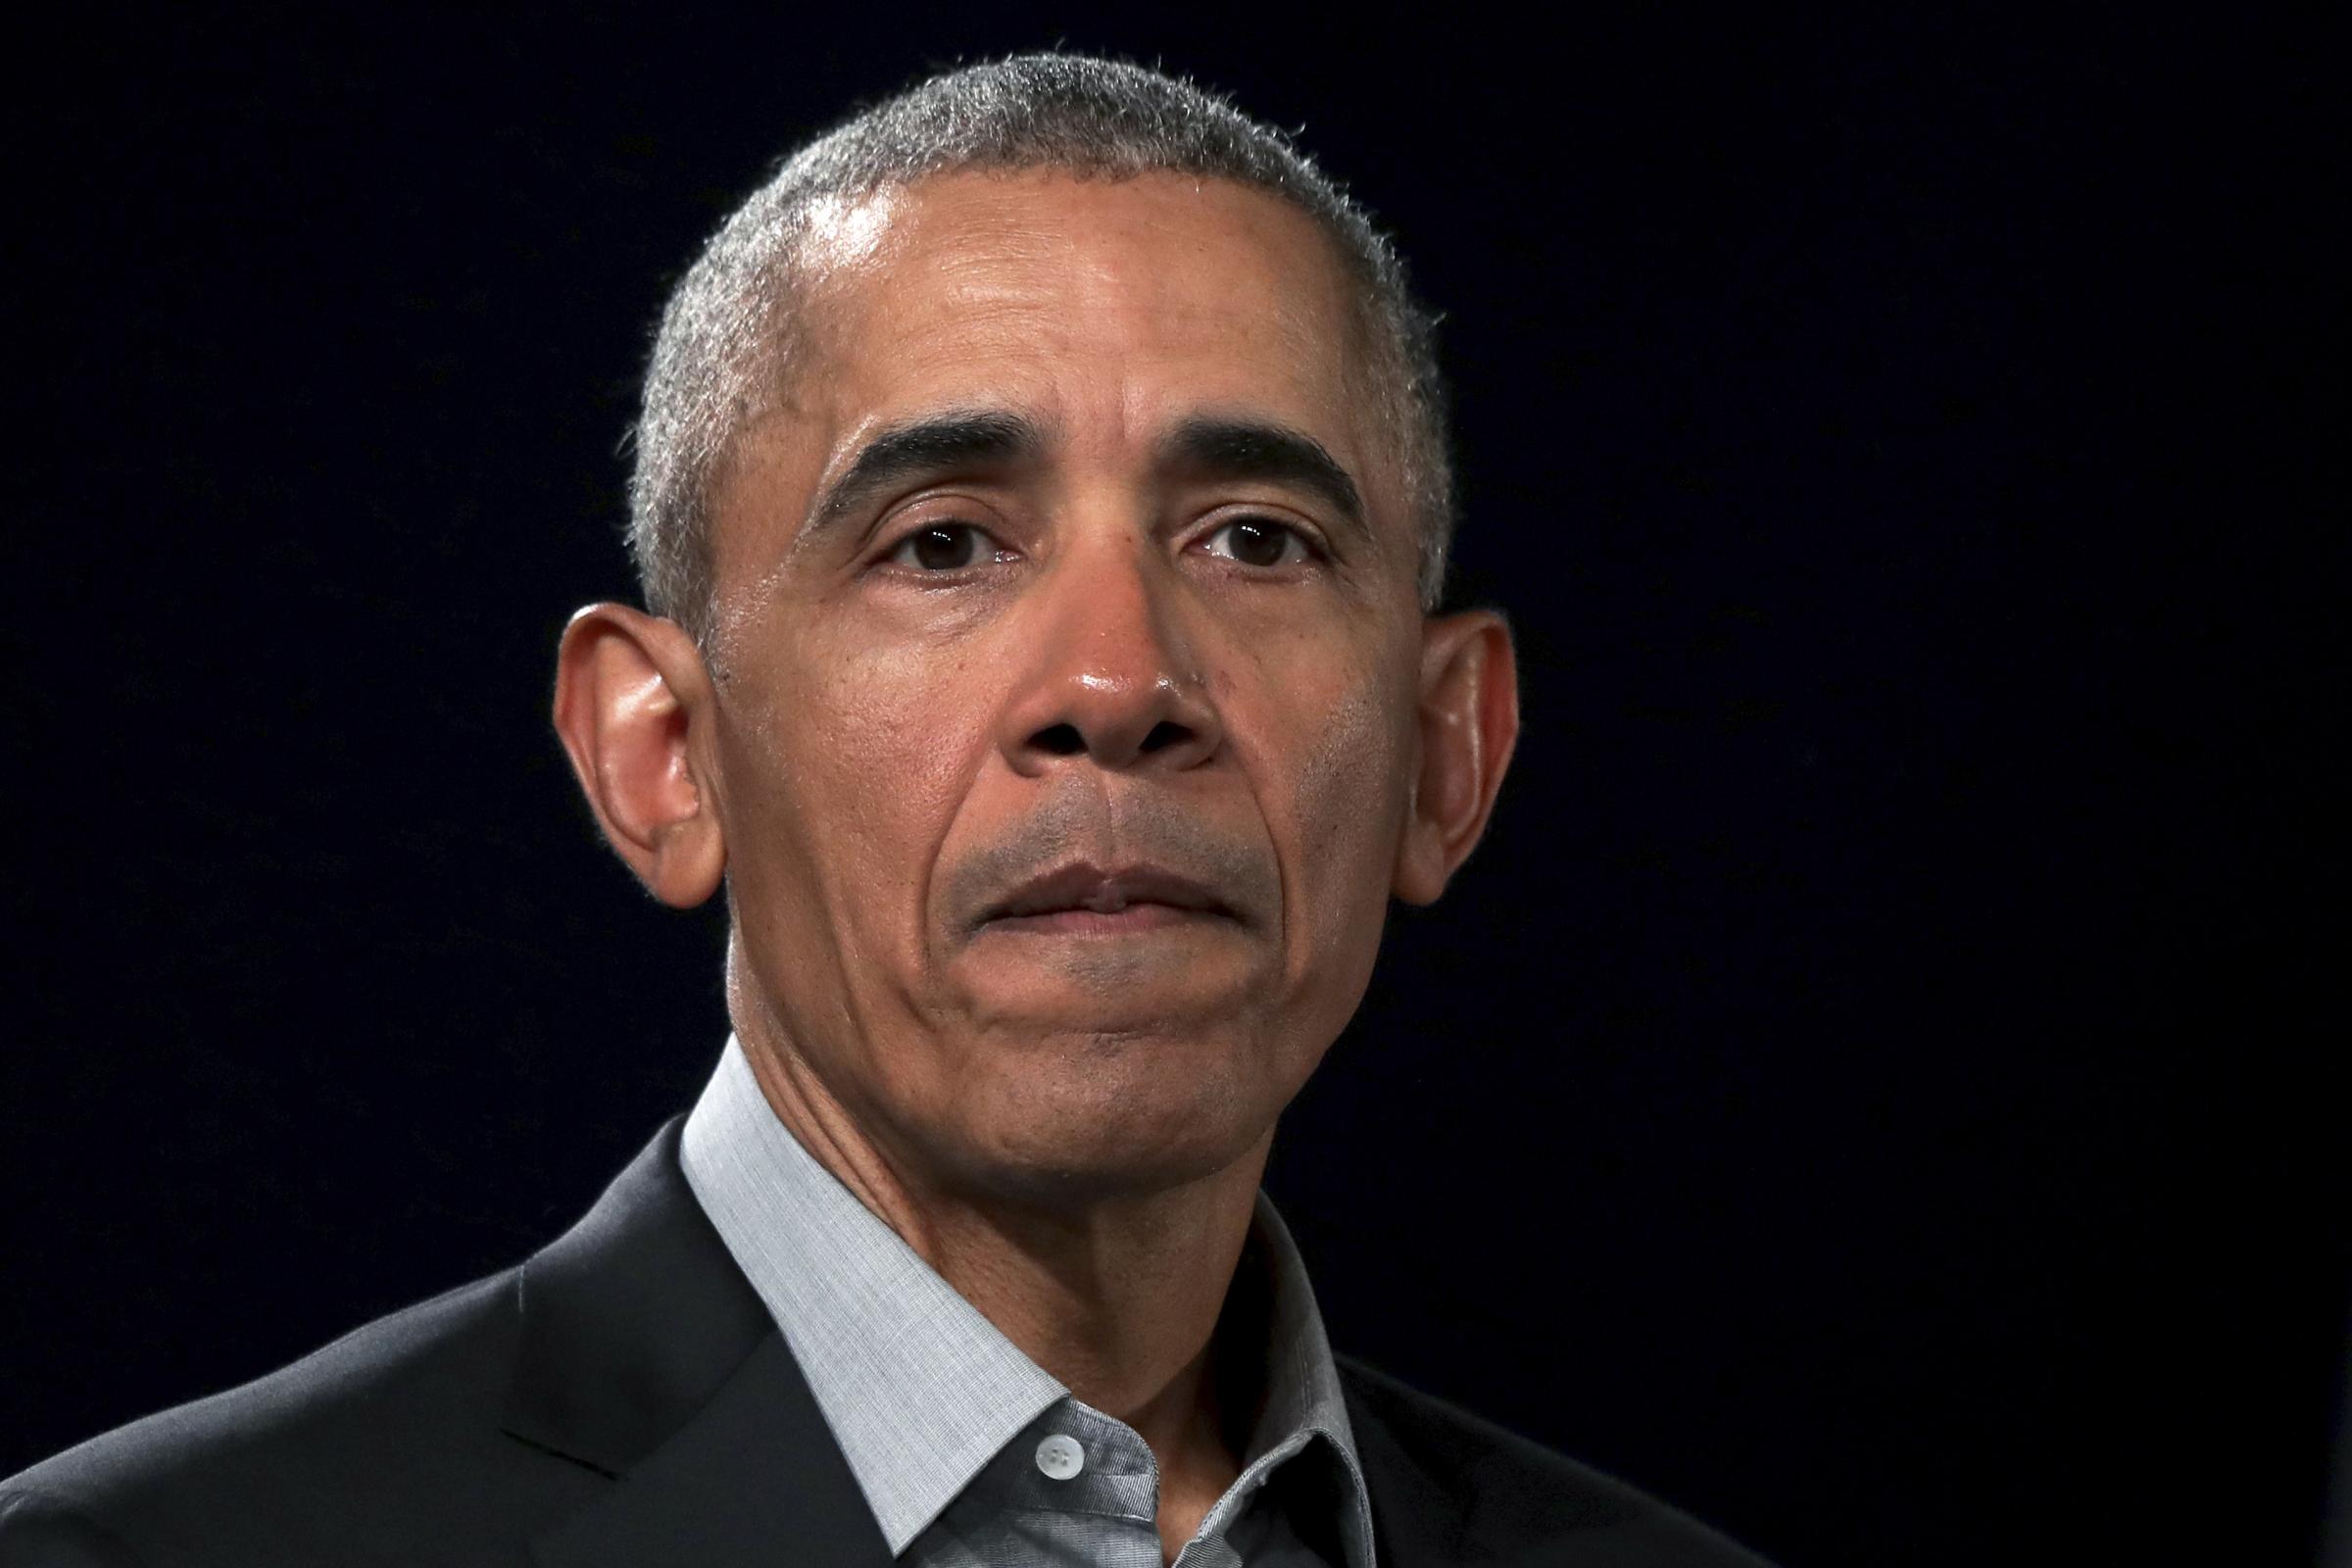 Obama cautions Democratic hopefuls on tacking too far left - Ealing Times